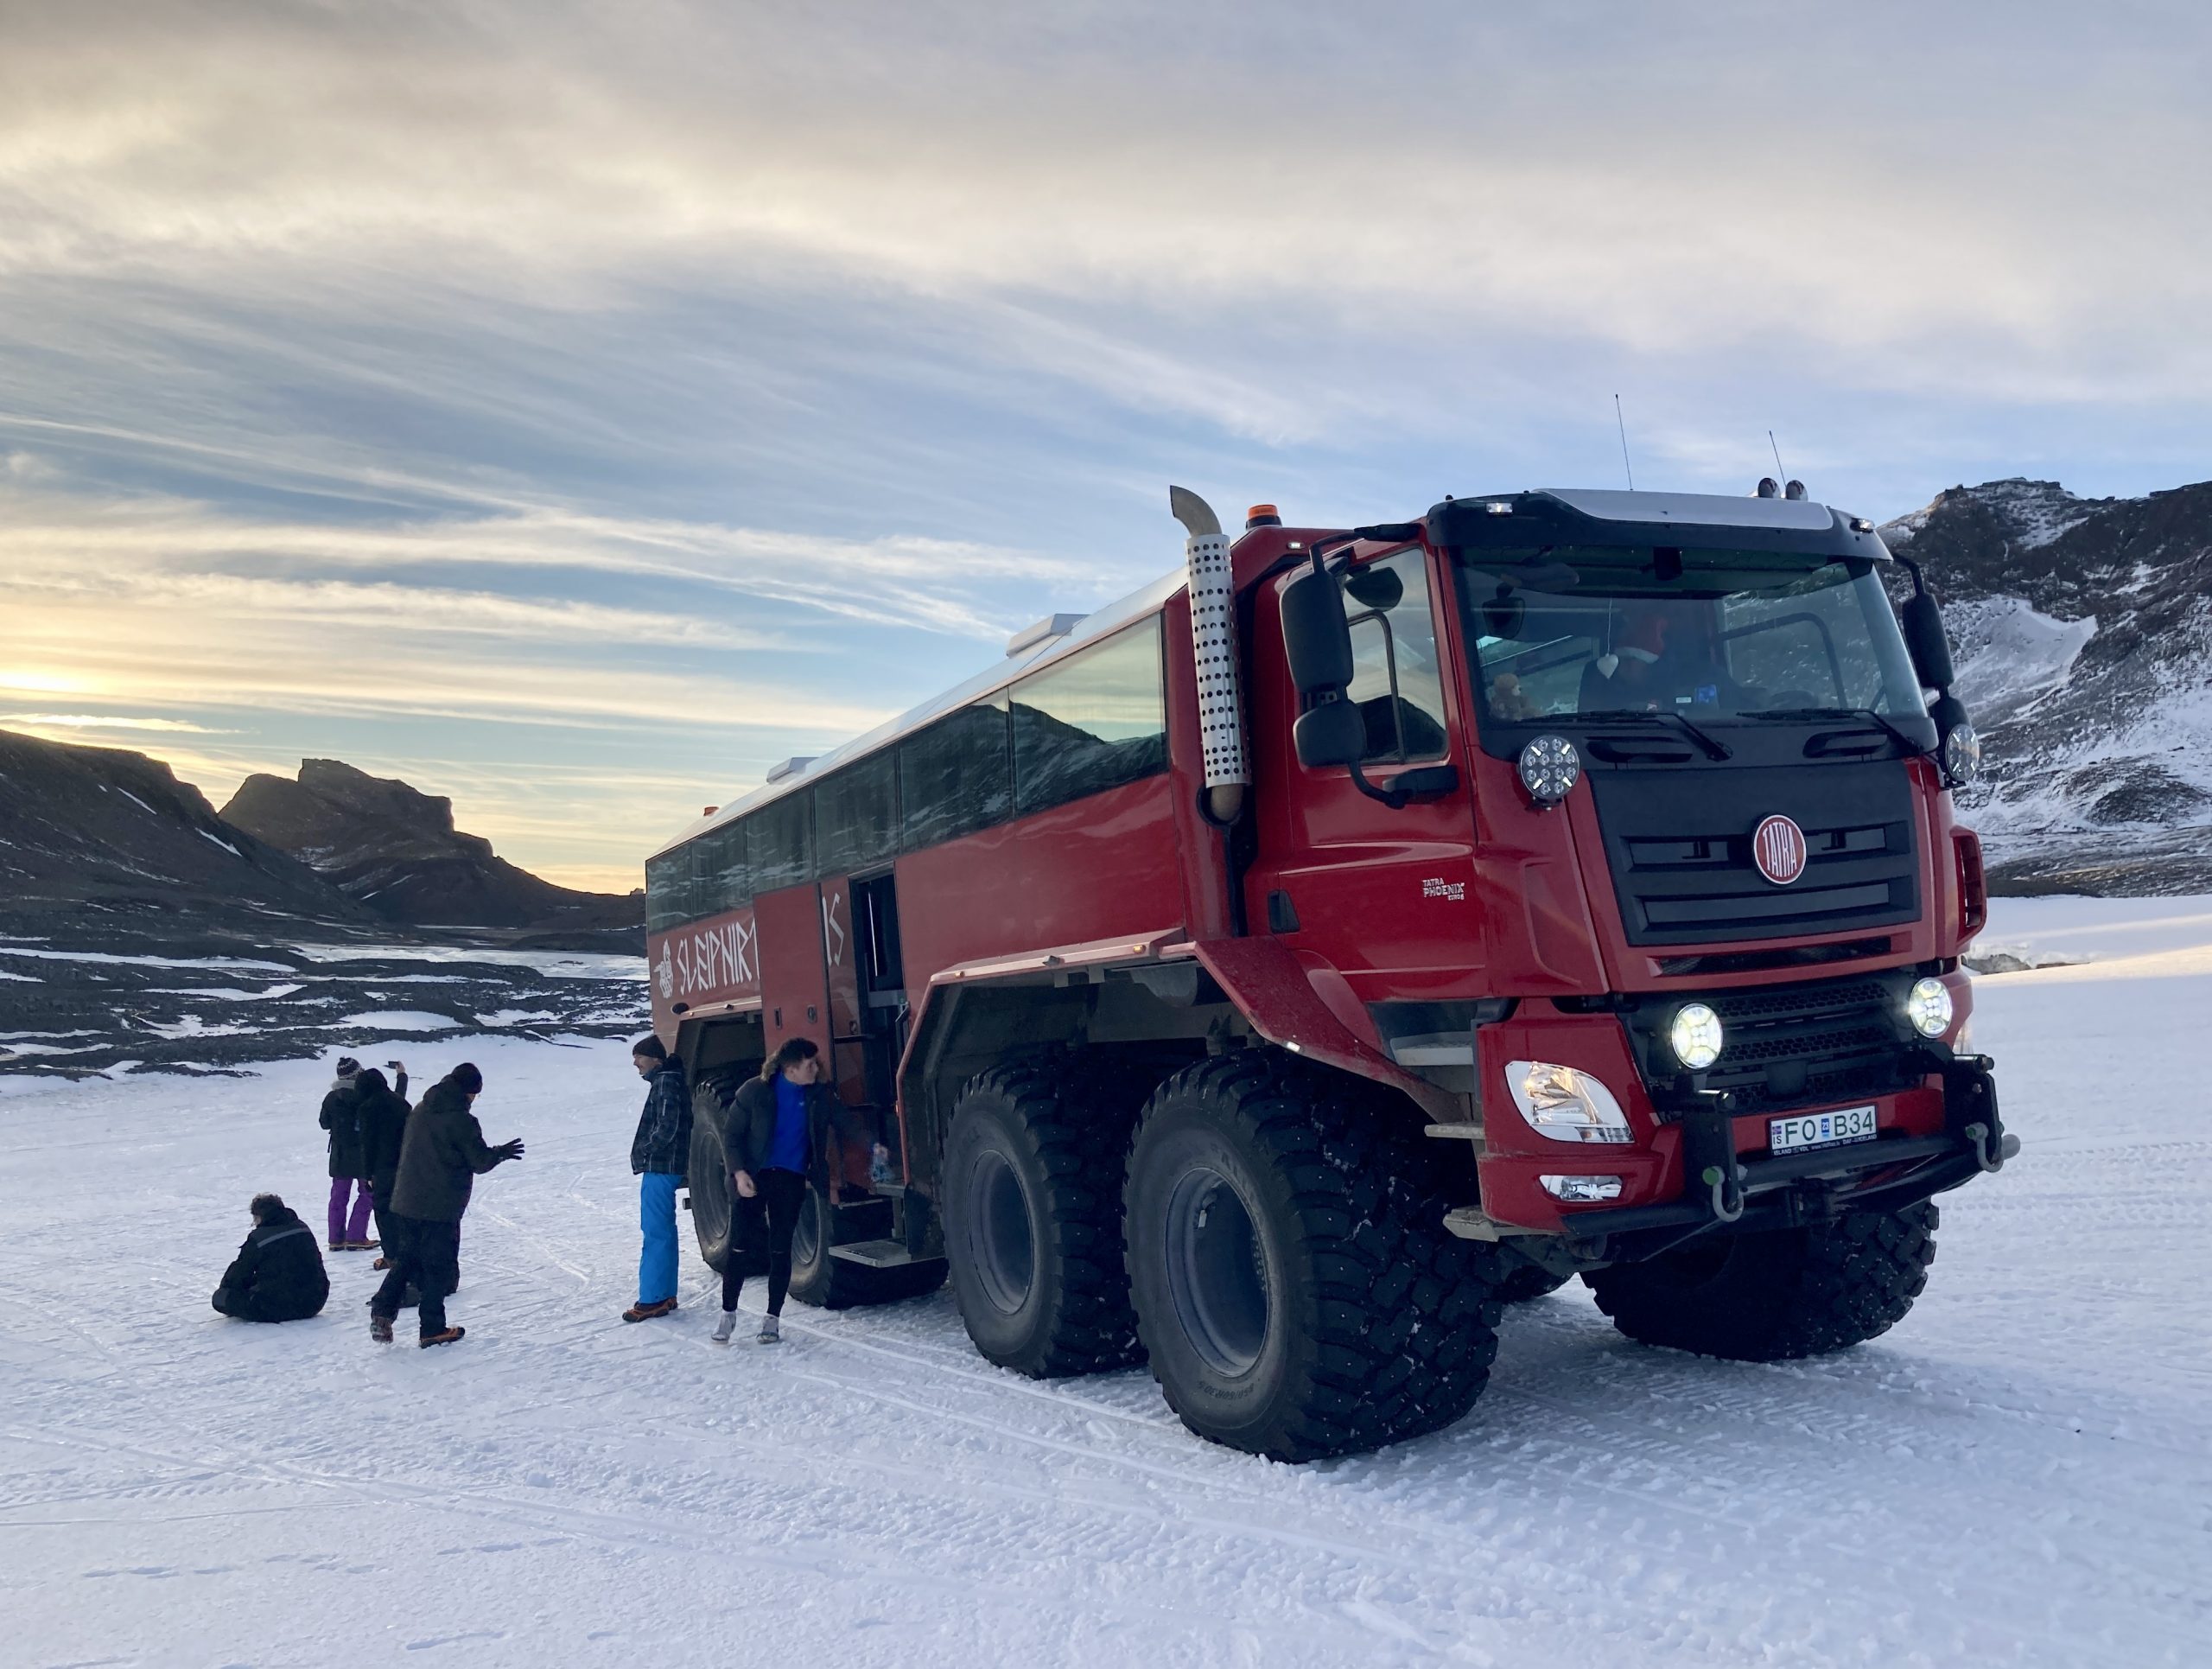 The glacier truck Sleipnir.